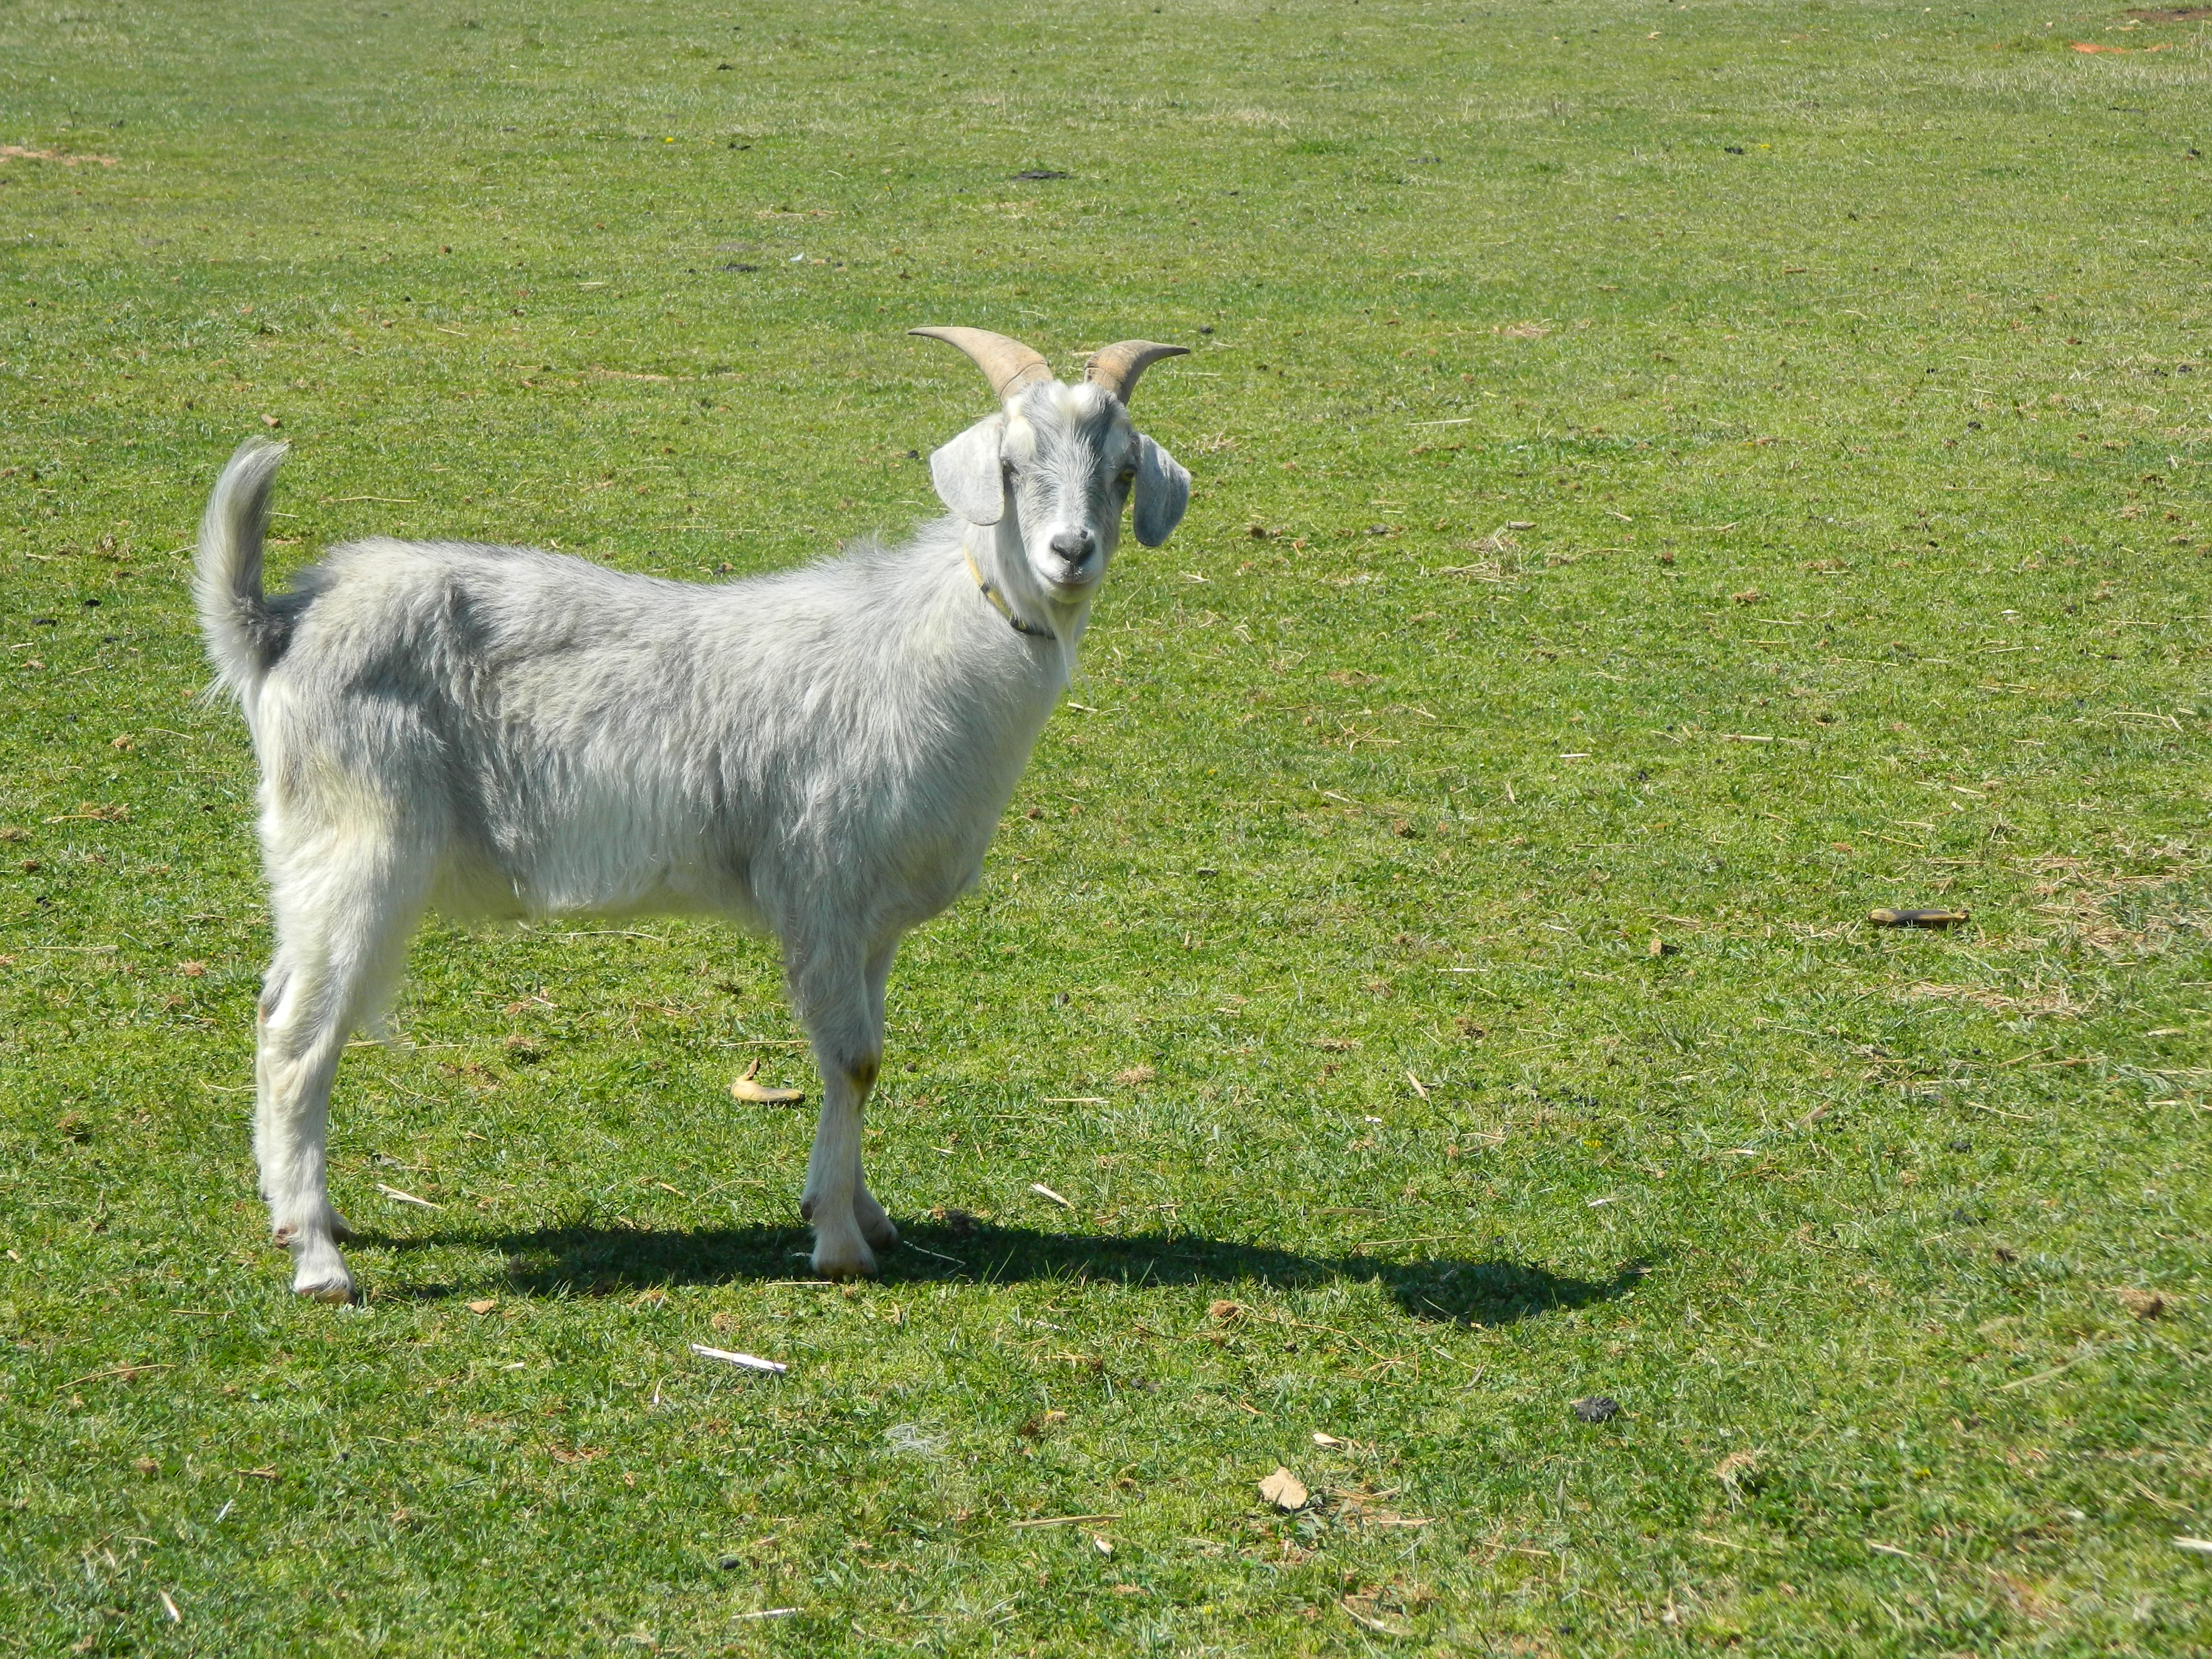 Petey goat